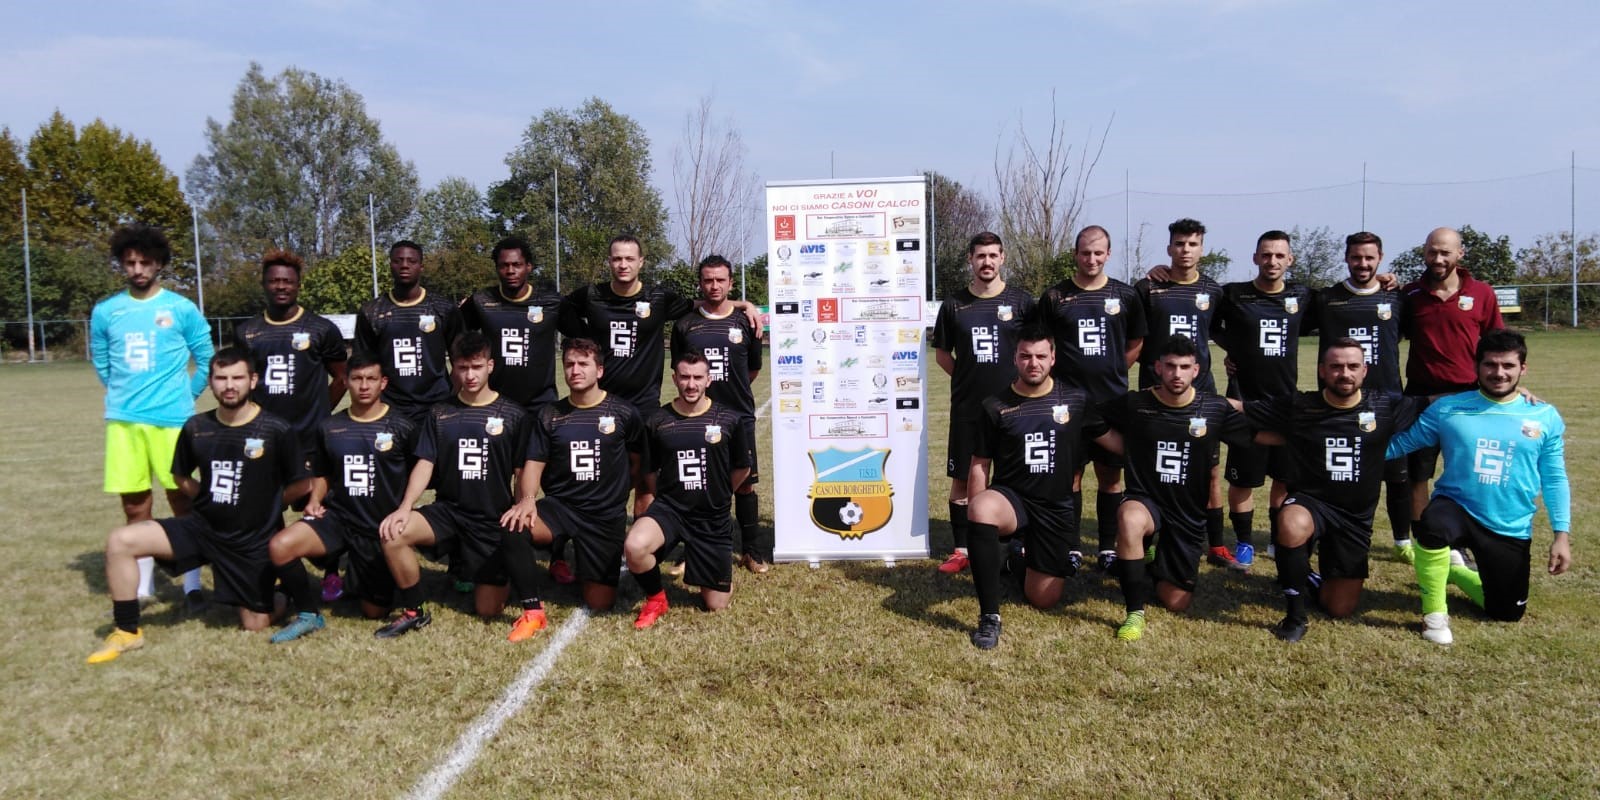 U.S.D. CASONI Calcio 2019/2020